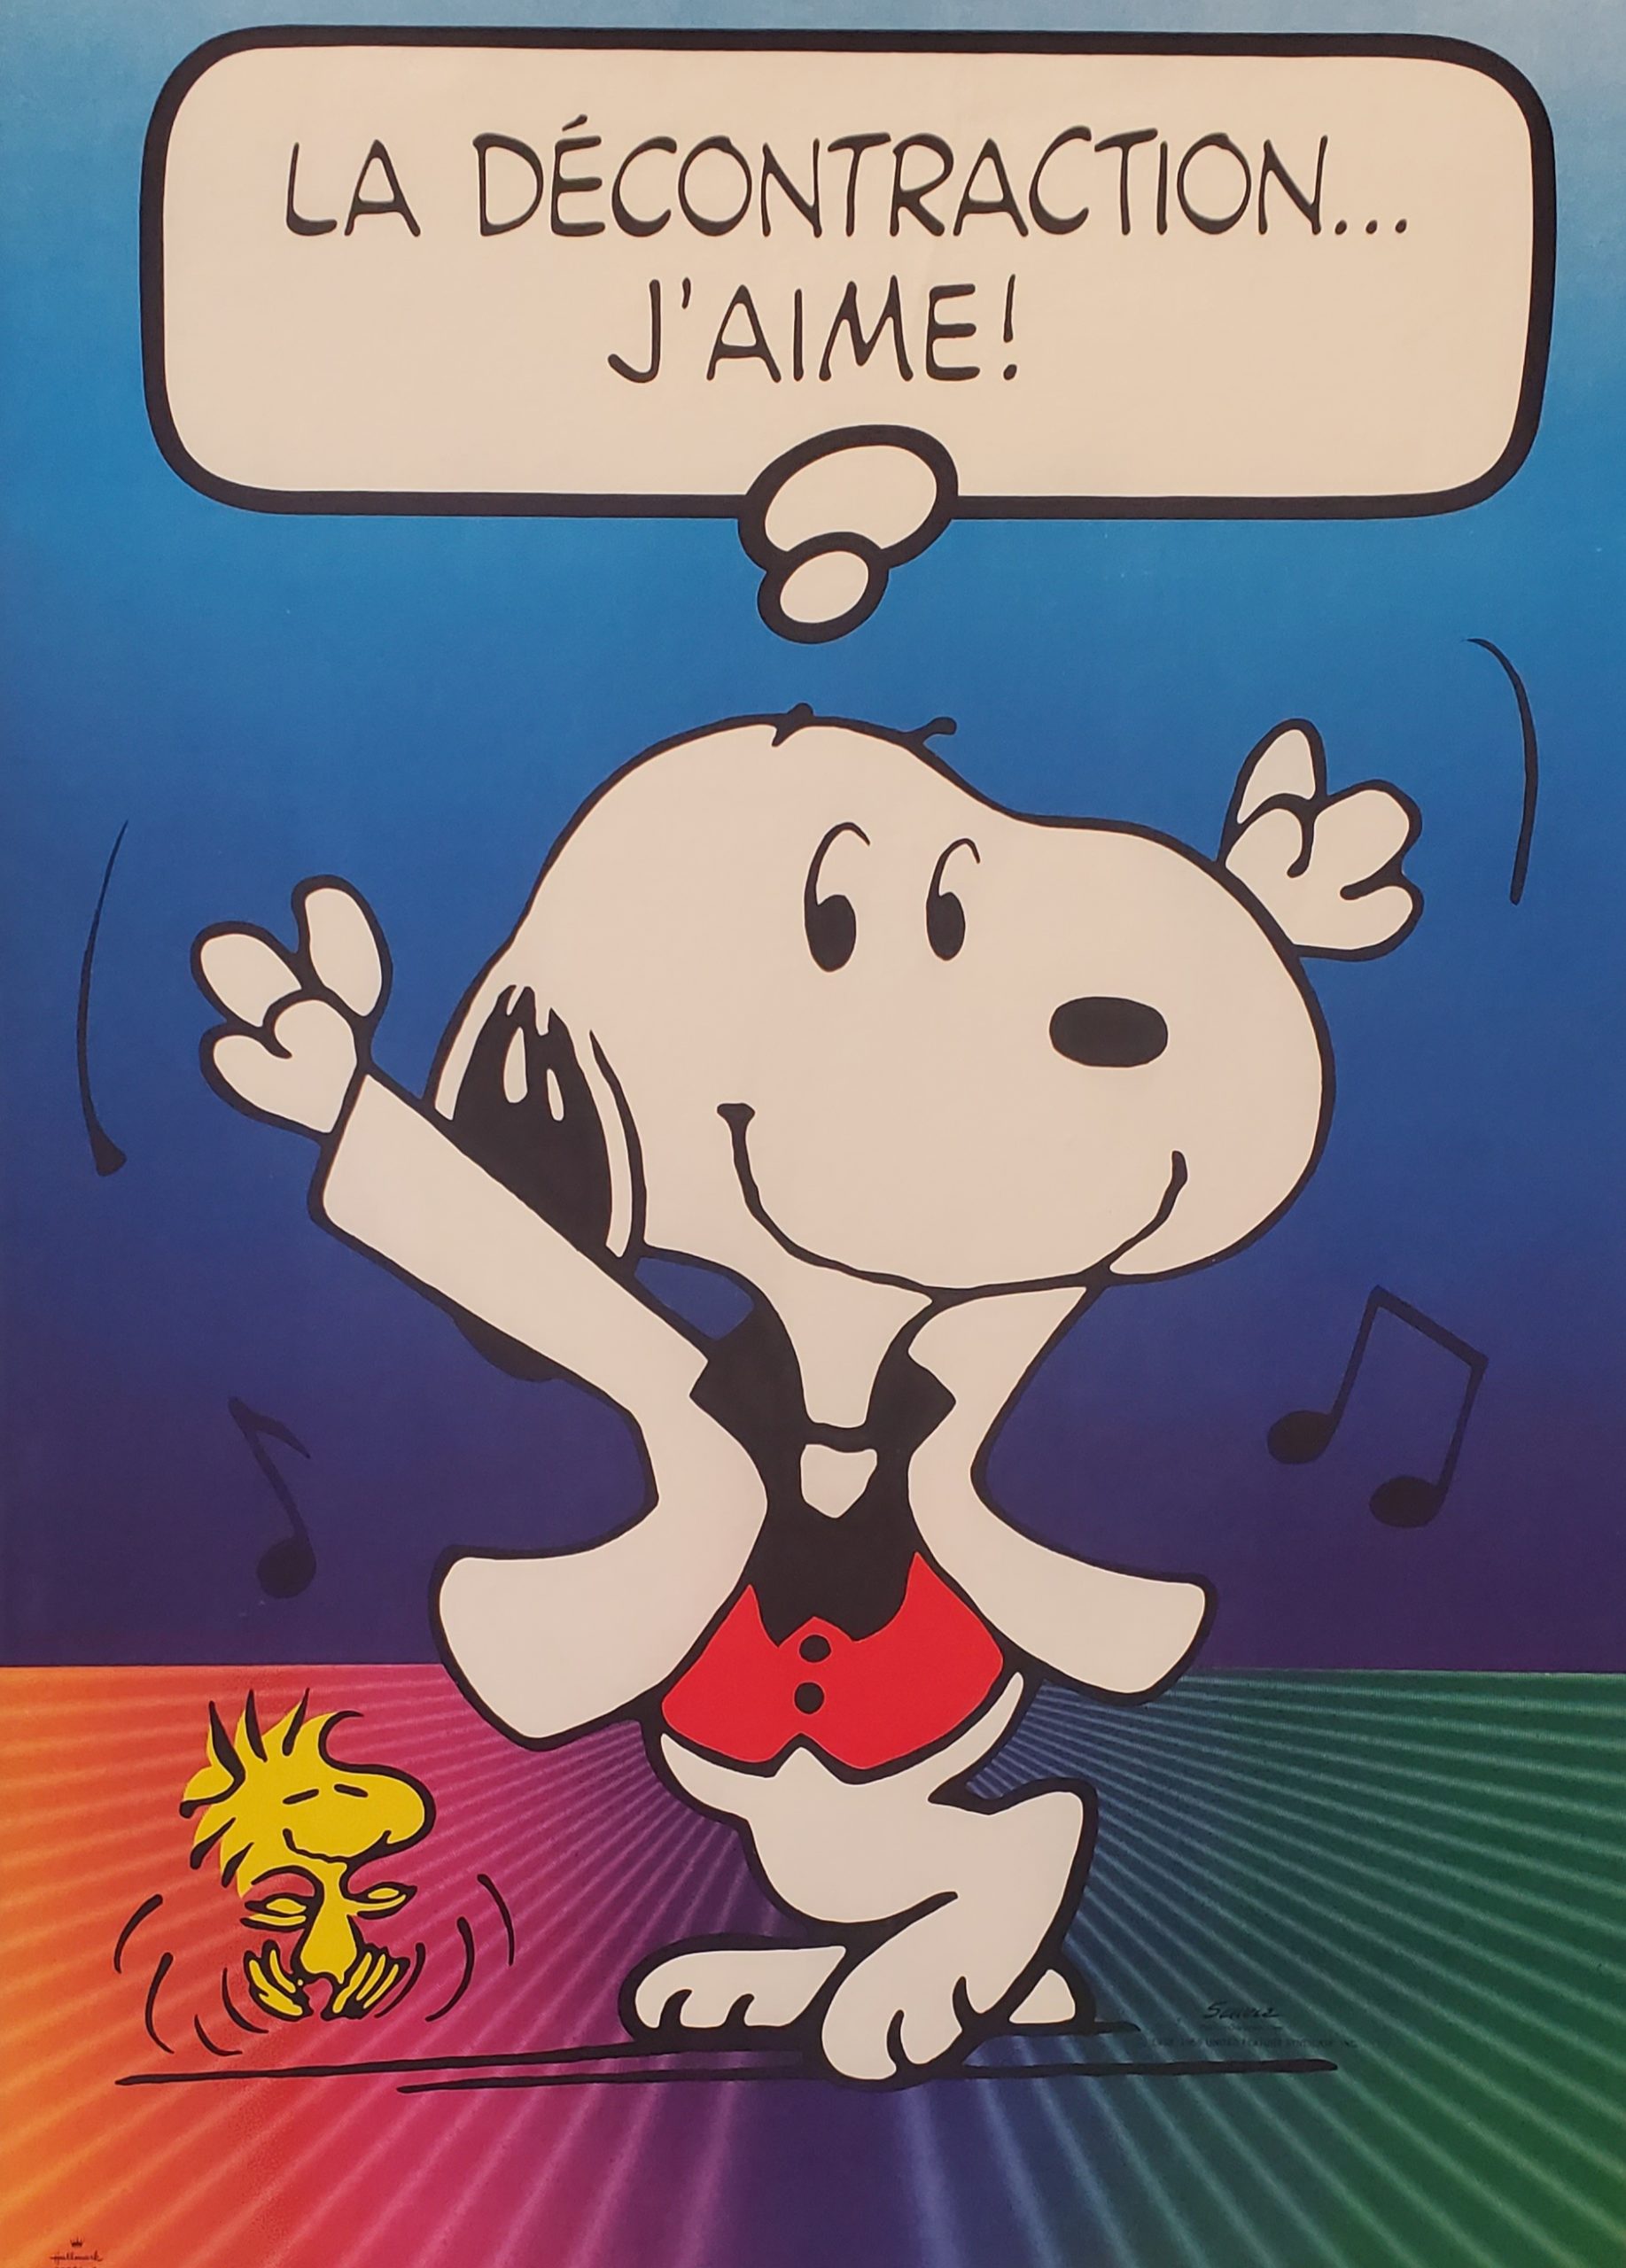 Snoopy 'La Decontraction J'aime!' Original Vintage Poster Letitia Morris Gallery